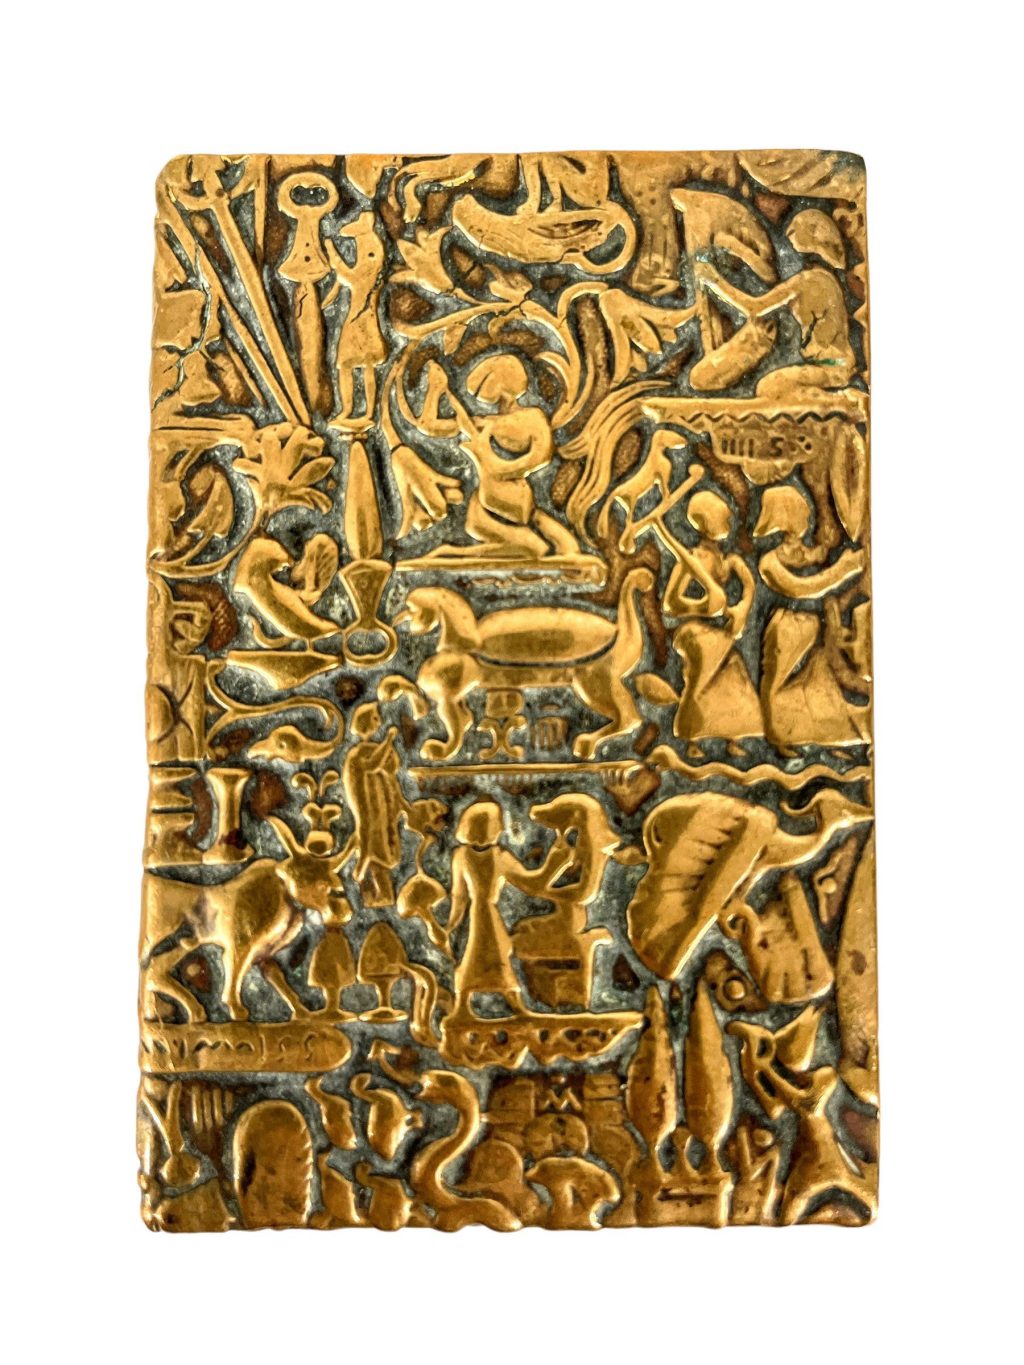 Vintage Egyptian Ornate Bronze Brass Metal Medium Match Box Matchbox Cover Decor Gold Smoker Tobacciana Fireplace c1930-40’s